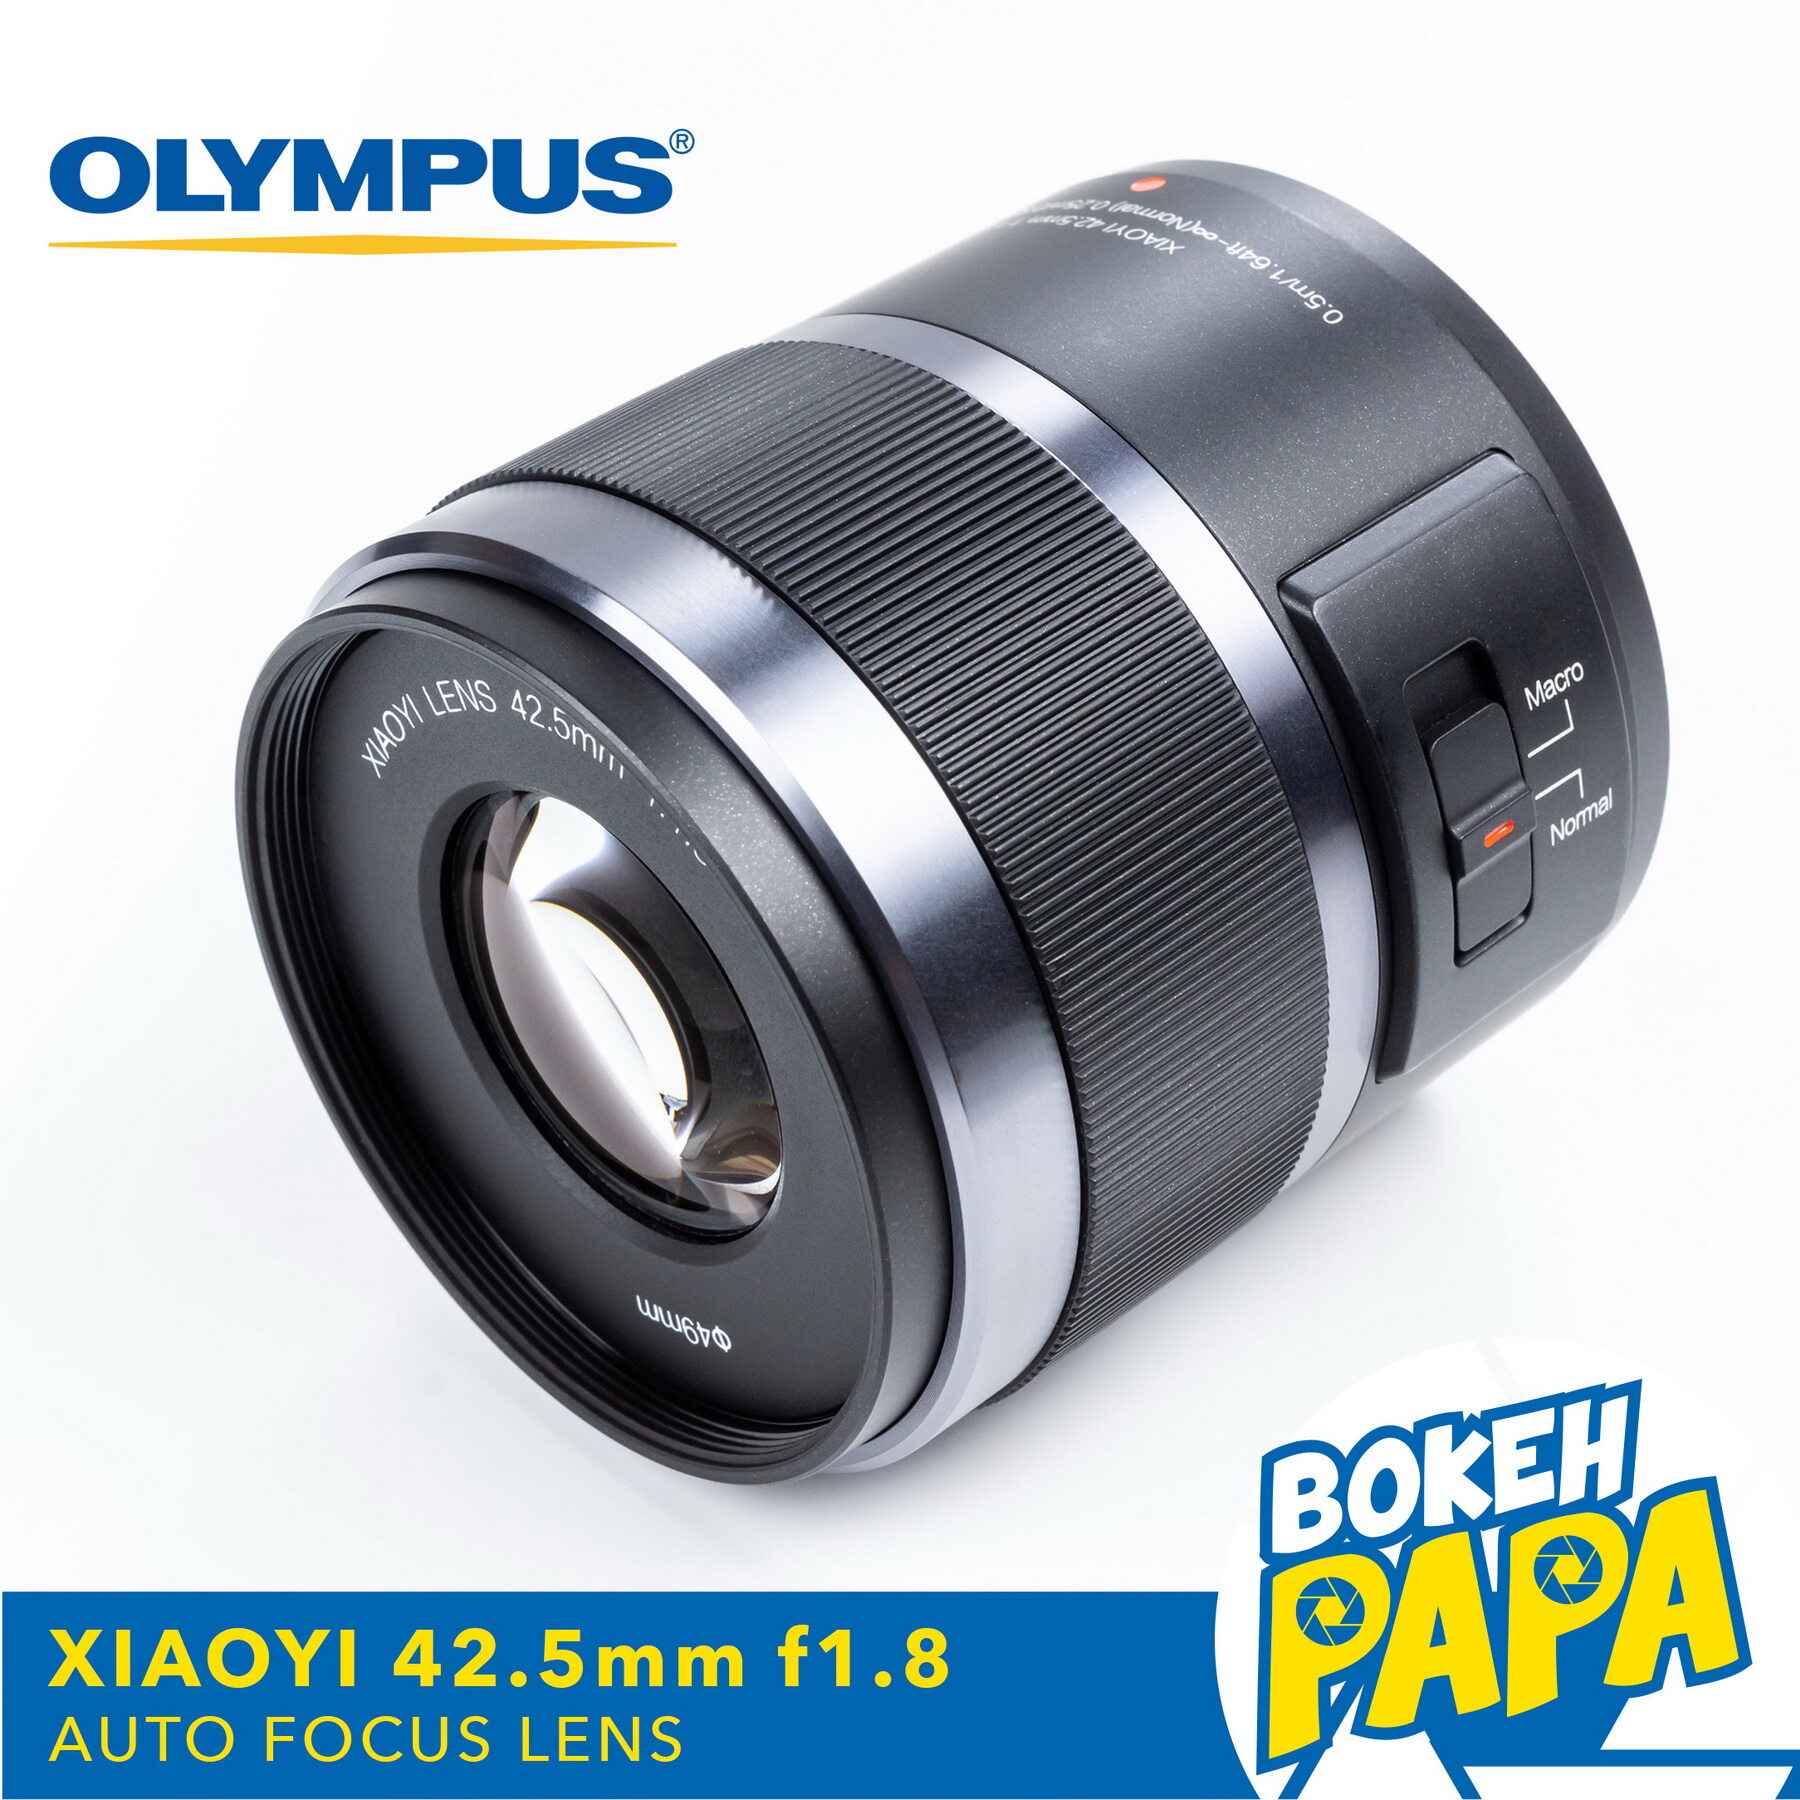 Xiaoyi 42.5mm F1.8 เลนส์ออโต้โฟกัส สำหรับใส่กล้อง Olympus And Panasonic Lumix Mirrorless ได้ทุกรุ่น ( Yi Auto Focus Lens 42.5mm F 1.7 ) ( Af / Mf ) ( เลนส์ละลาย ) ( หน้าชัดหลังเบลอ )( 50 Mm ). 